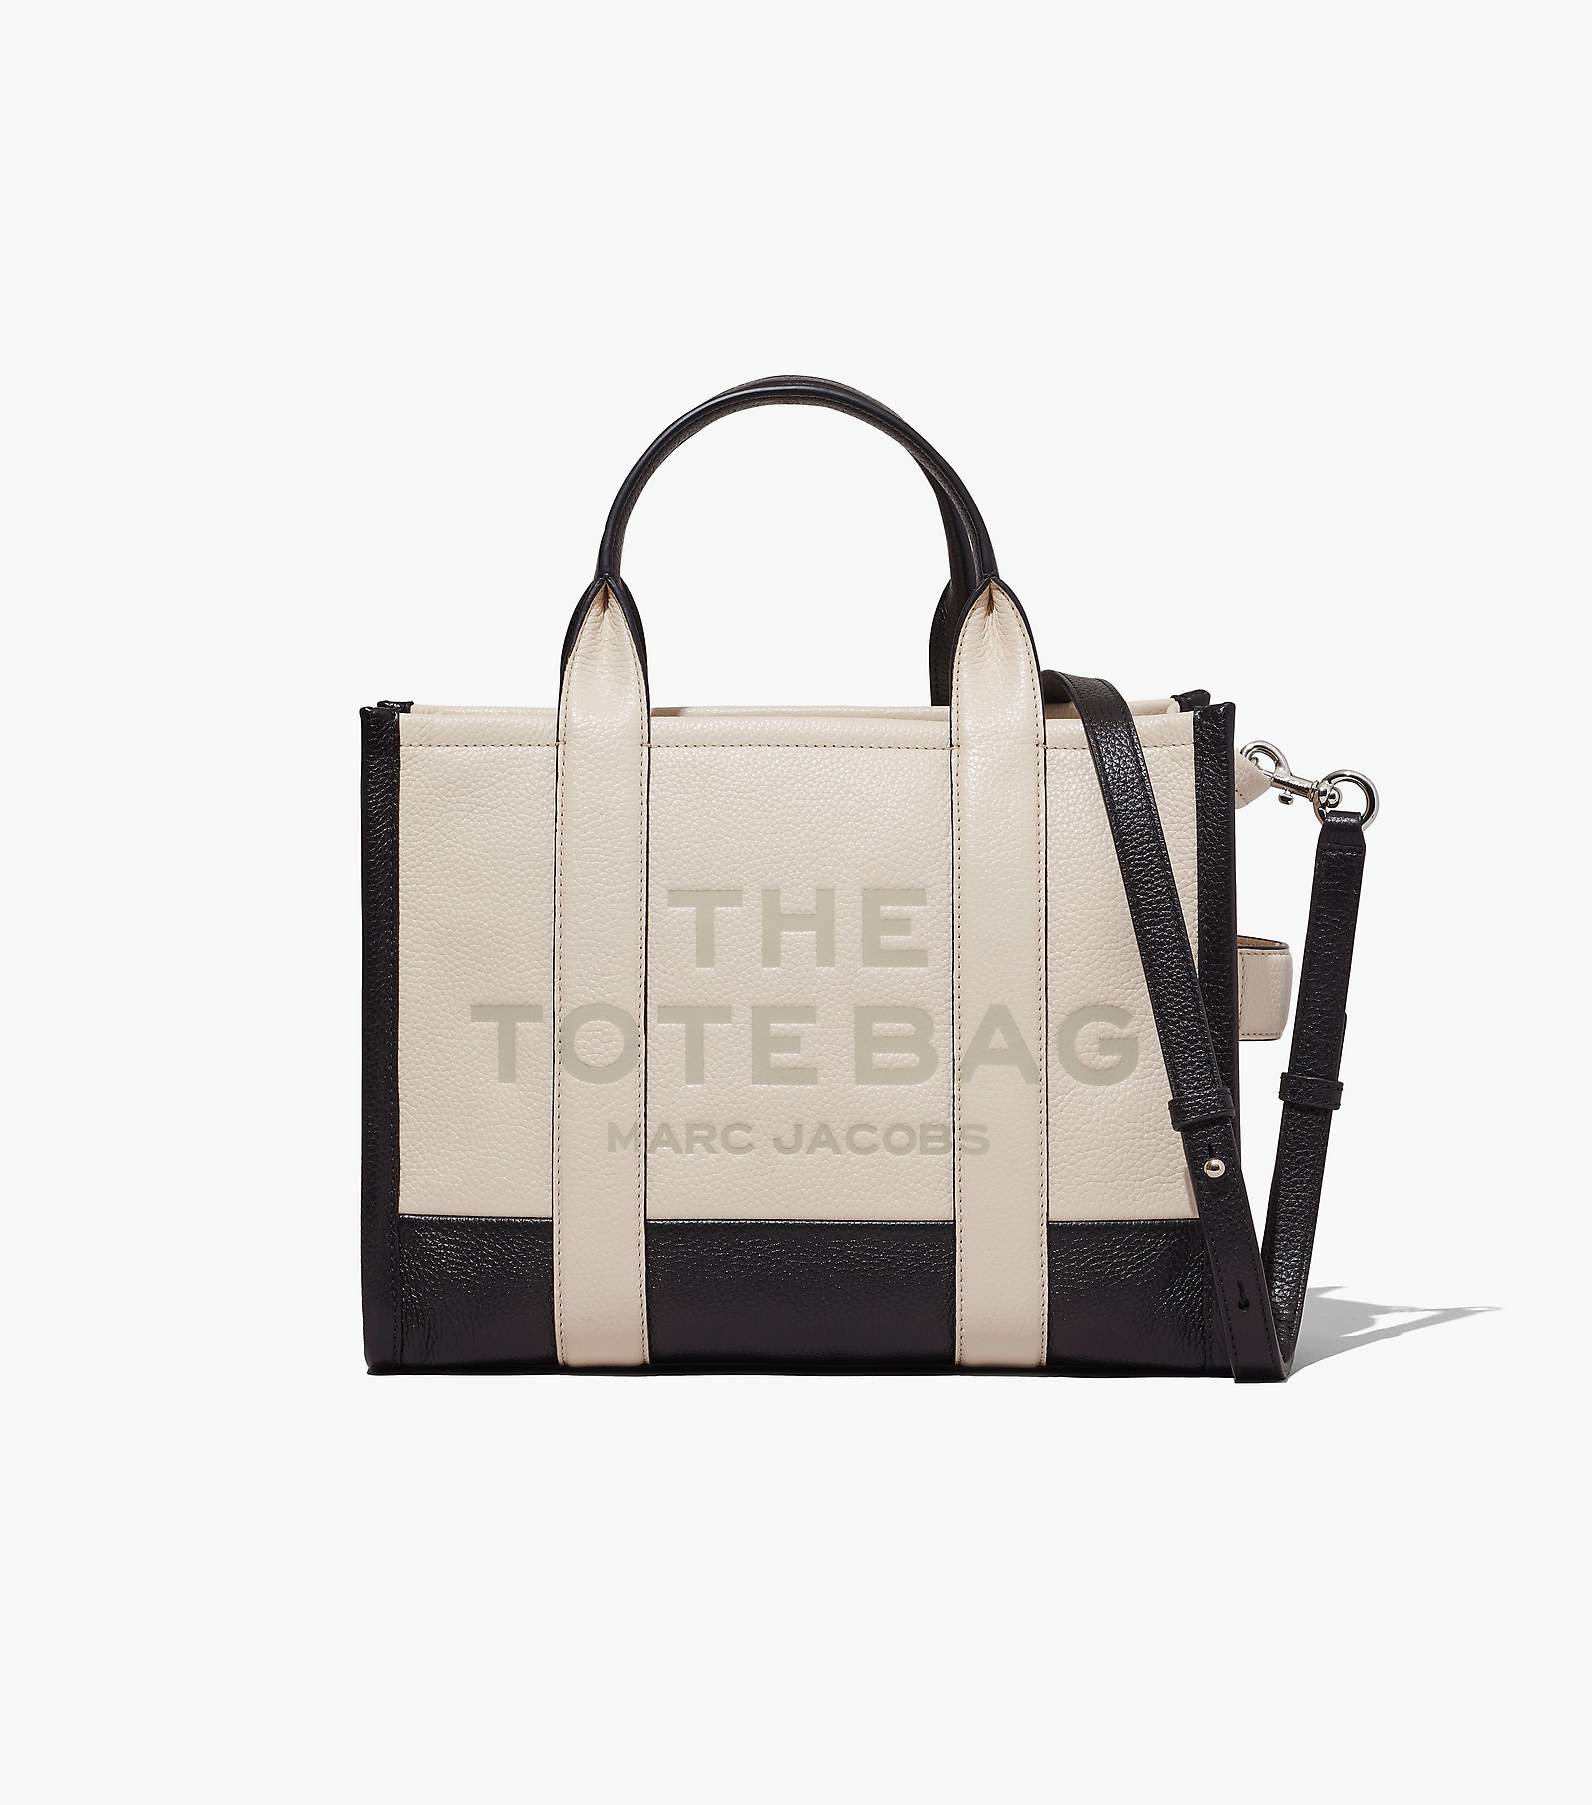 The Medium Tote Bag, Marc Jacobs